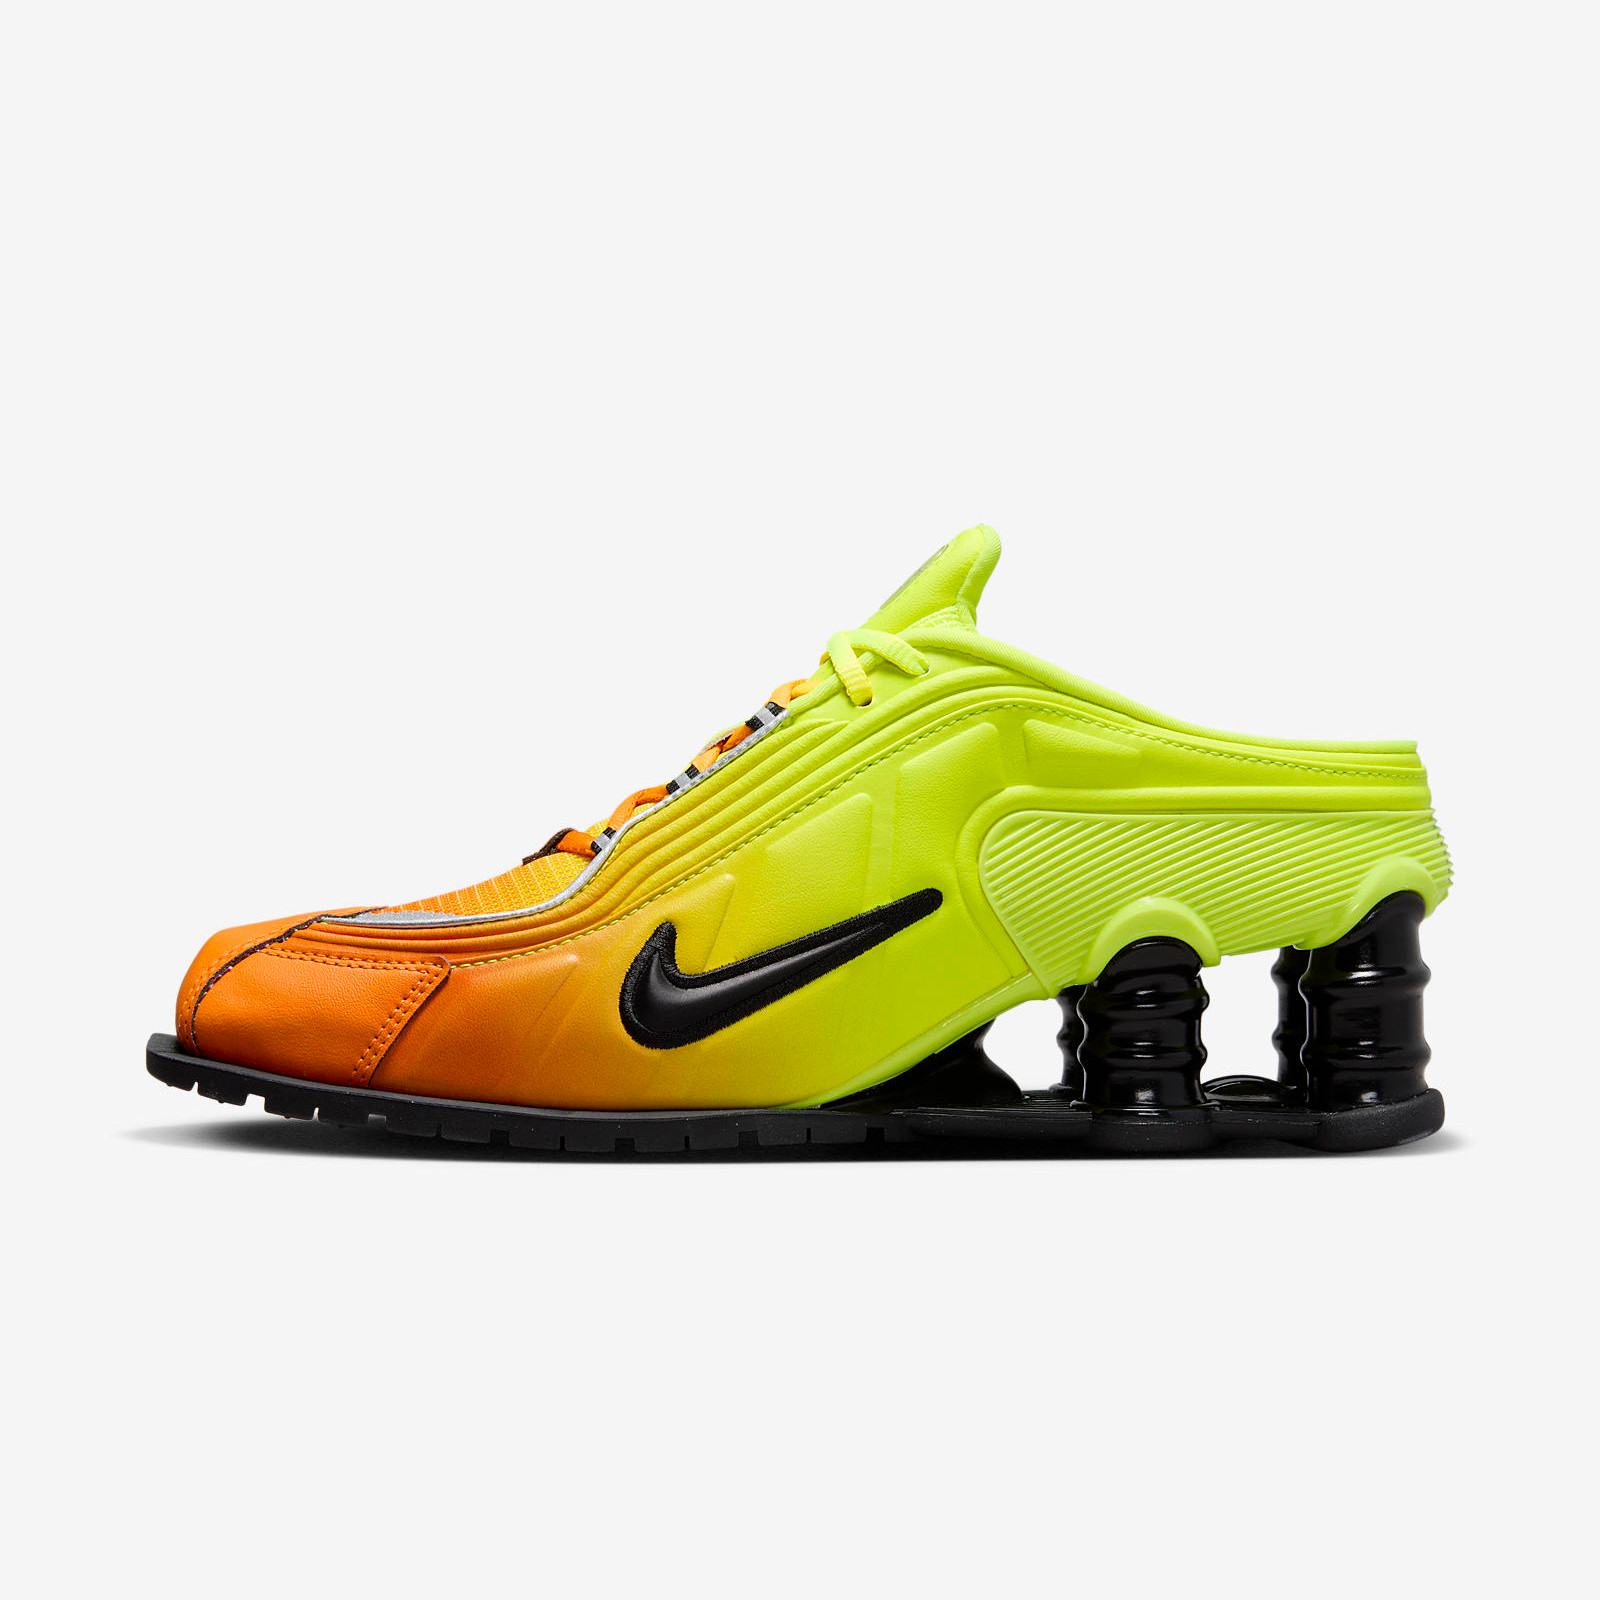 Martine Rose x Nike
Shox MR4
« Safety Orange »